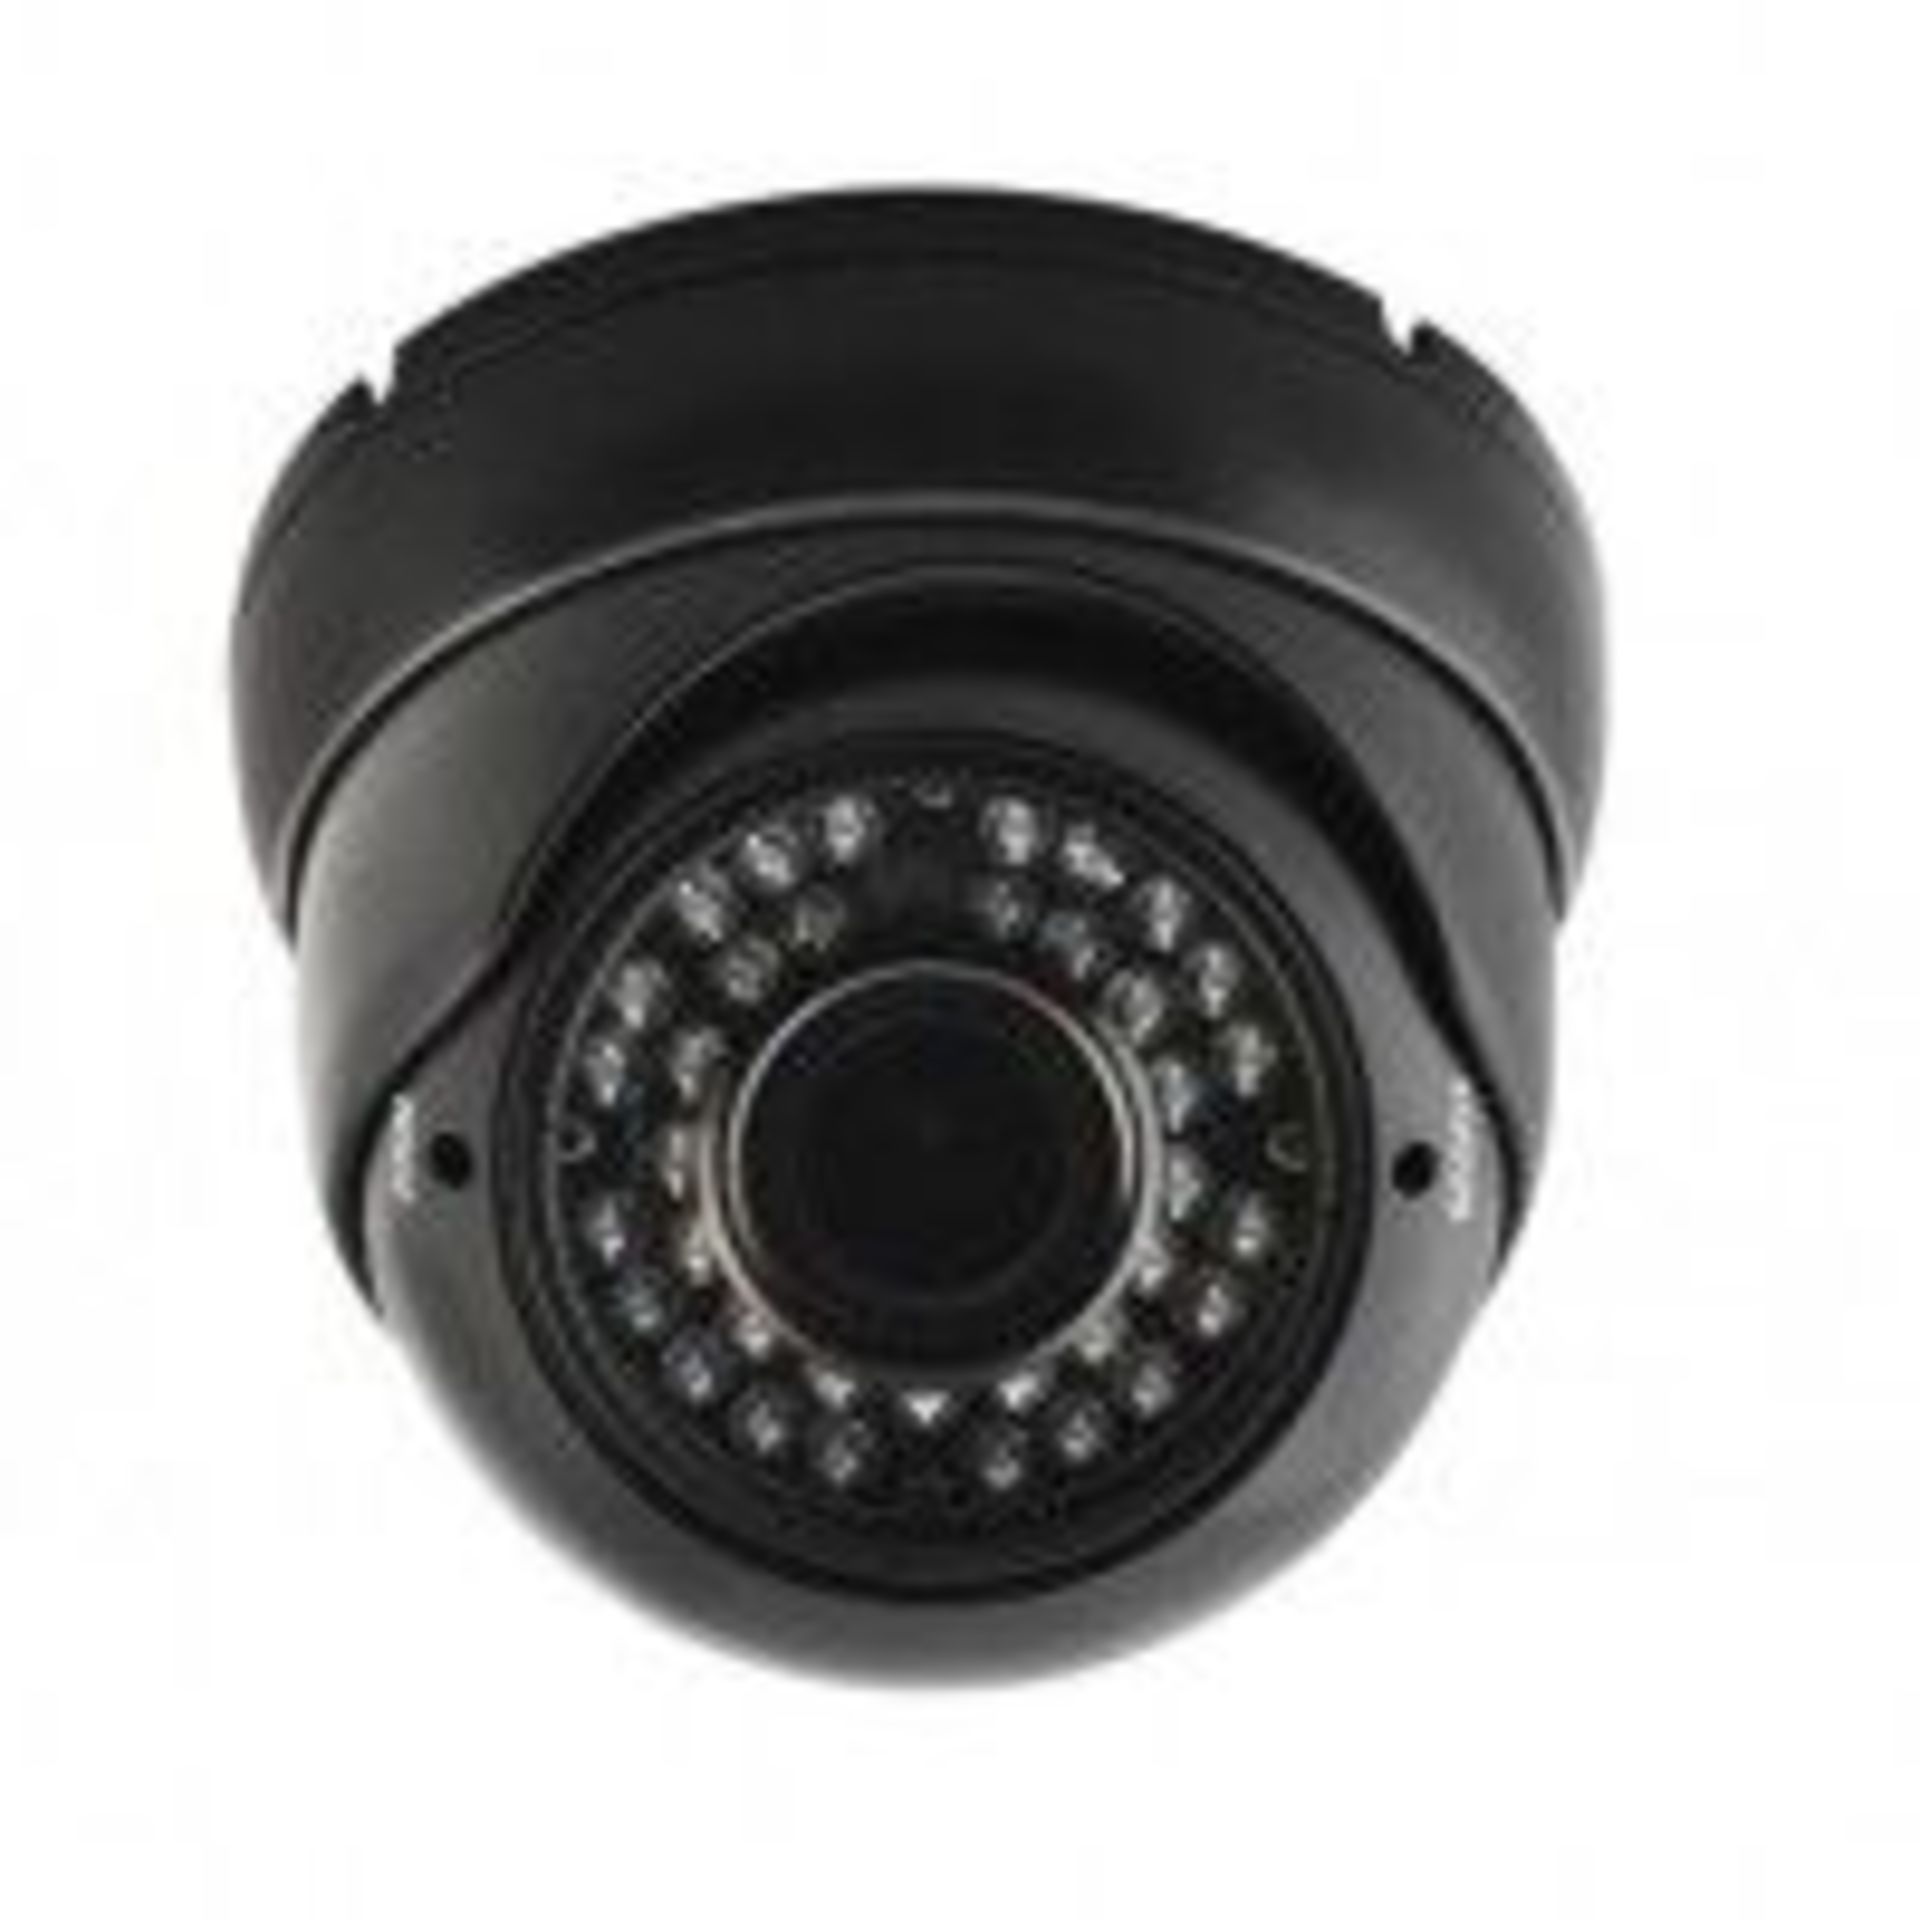 V Brand New Avtech 540TVL Eyeball IR Dome Camera with OSD Cable- 1/3" Sony Lens CCD- IR Range 30m